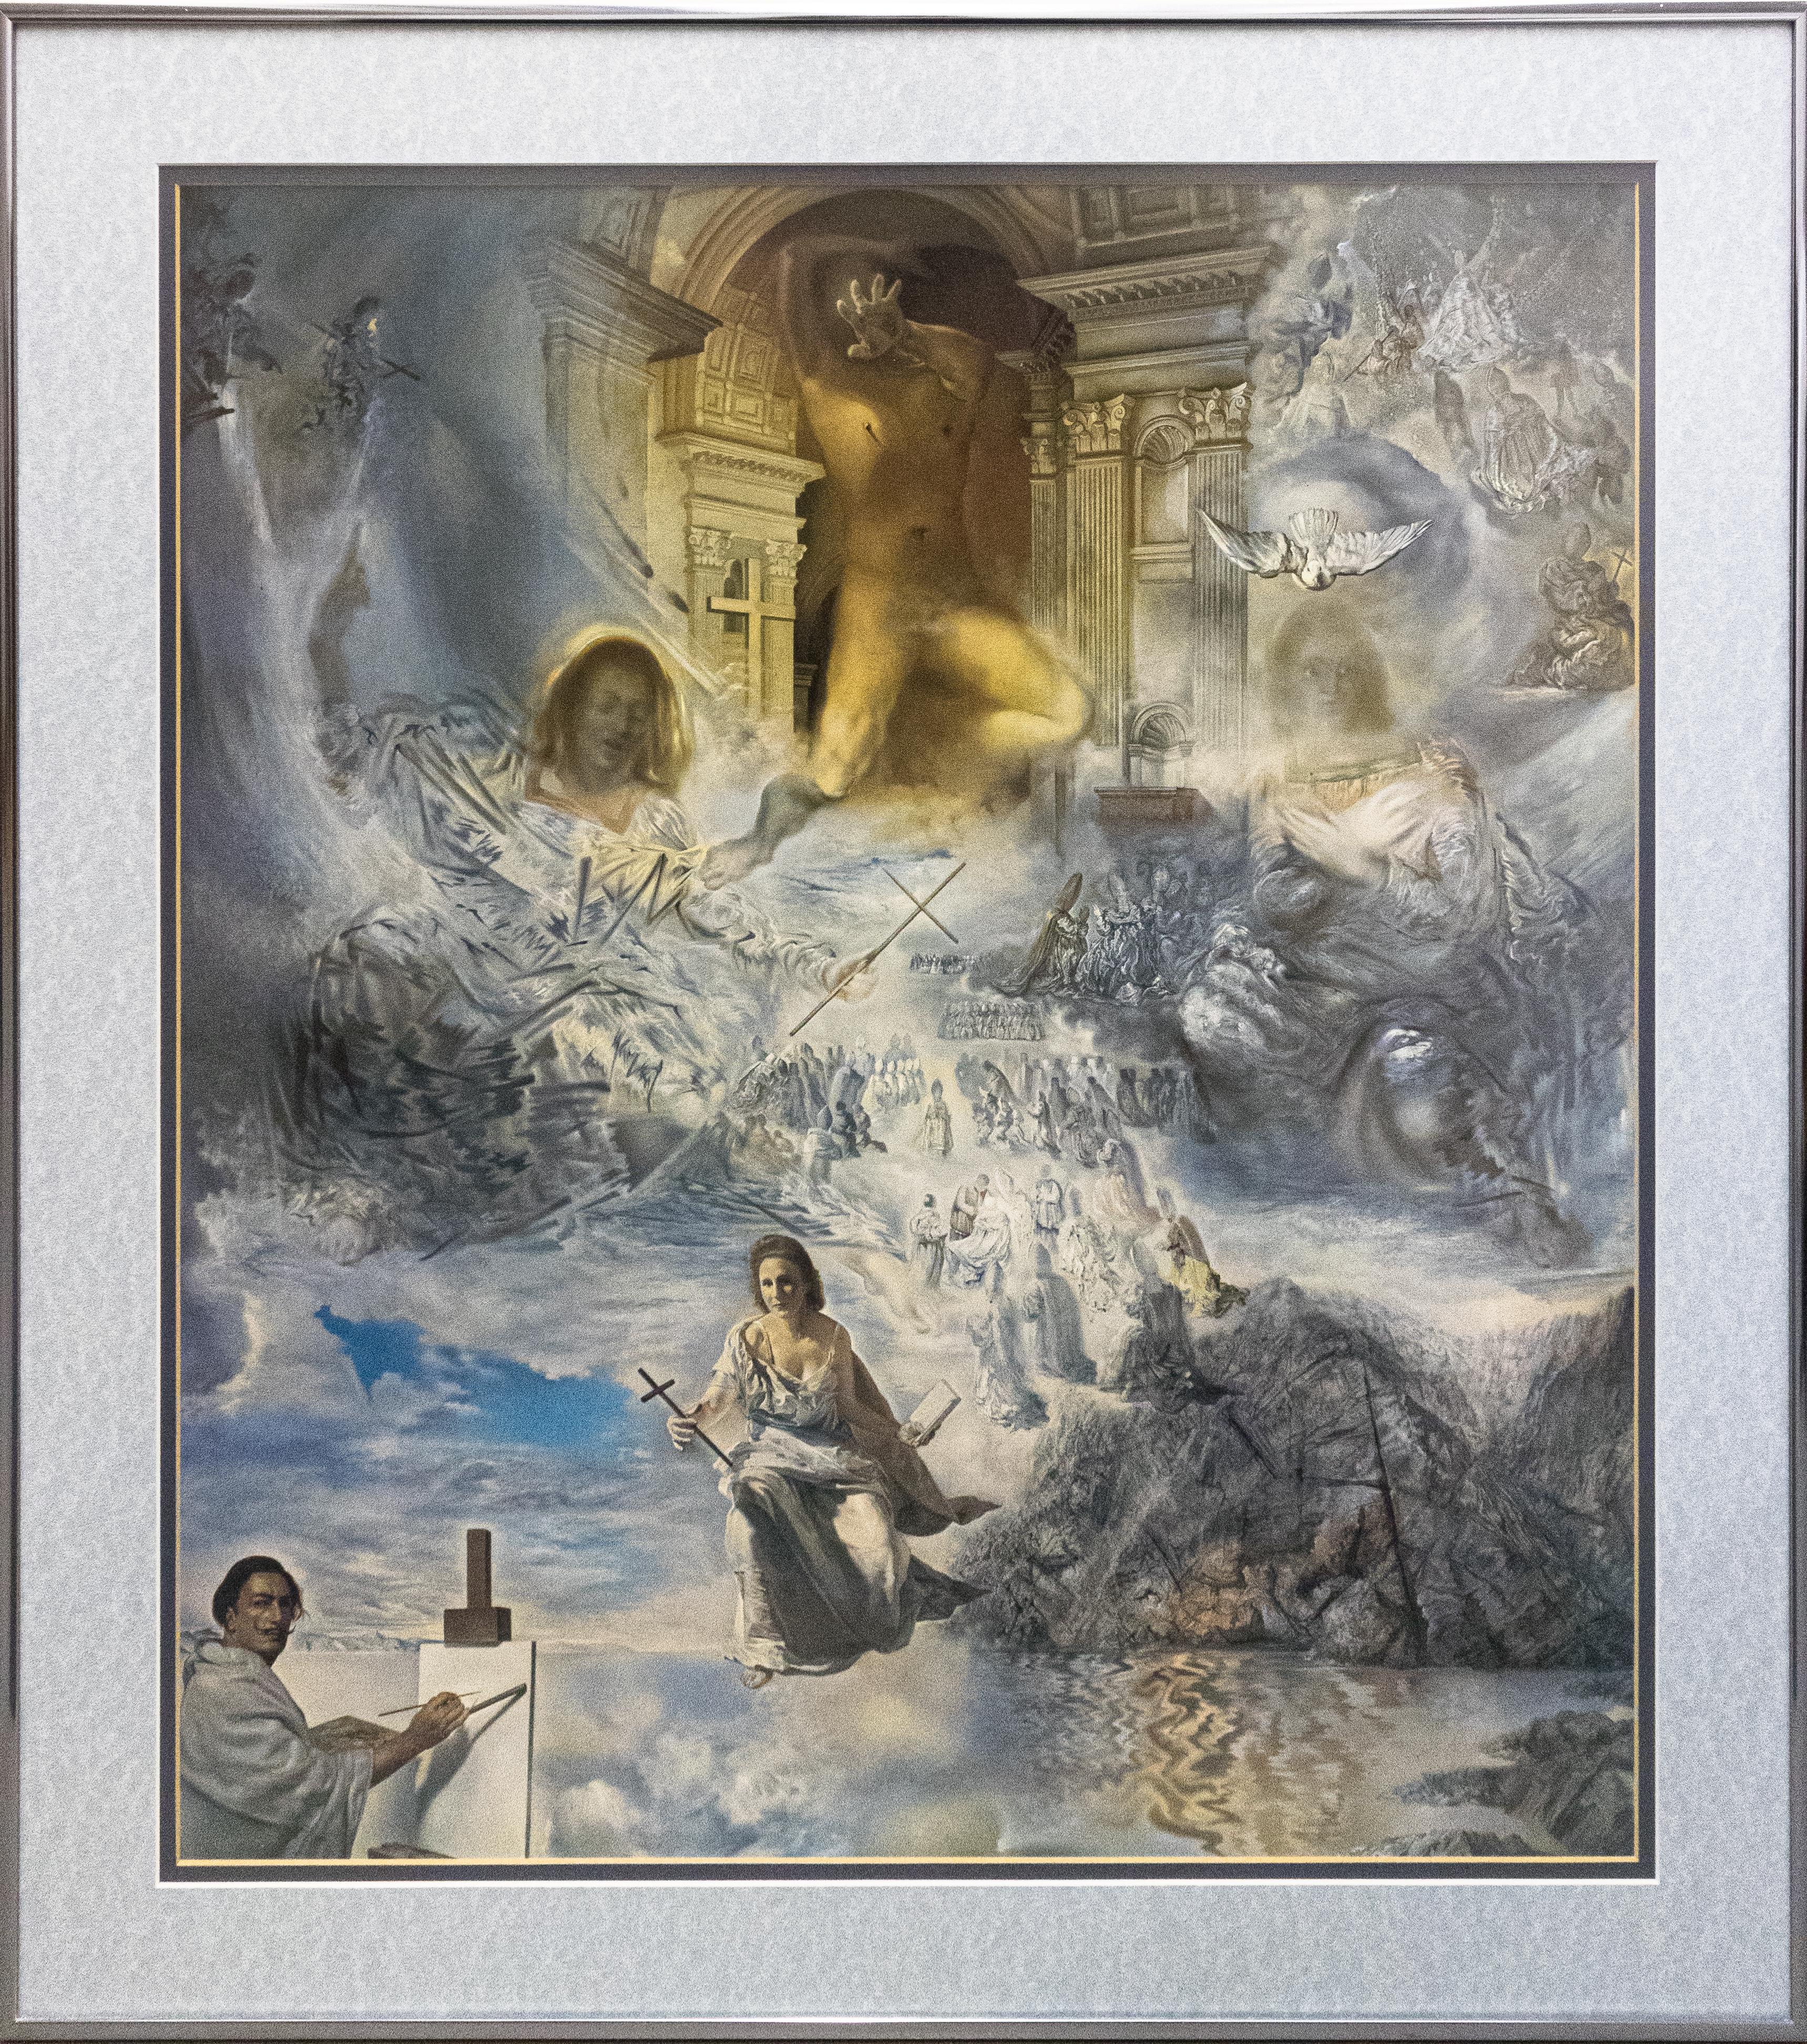 "Ecumenical Council" Framed Lithograph After Salvador Dali - Print by (after) Salvador Dali